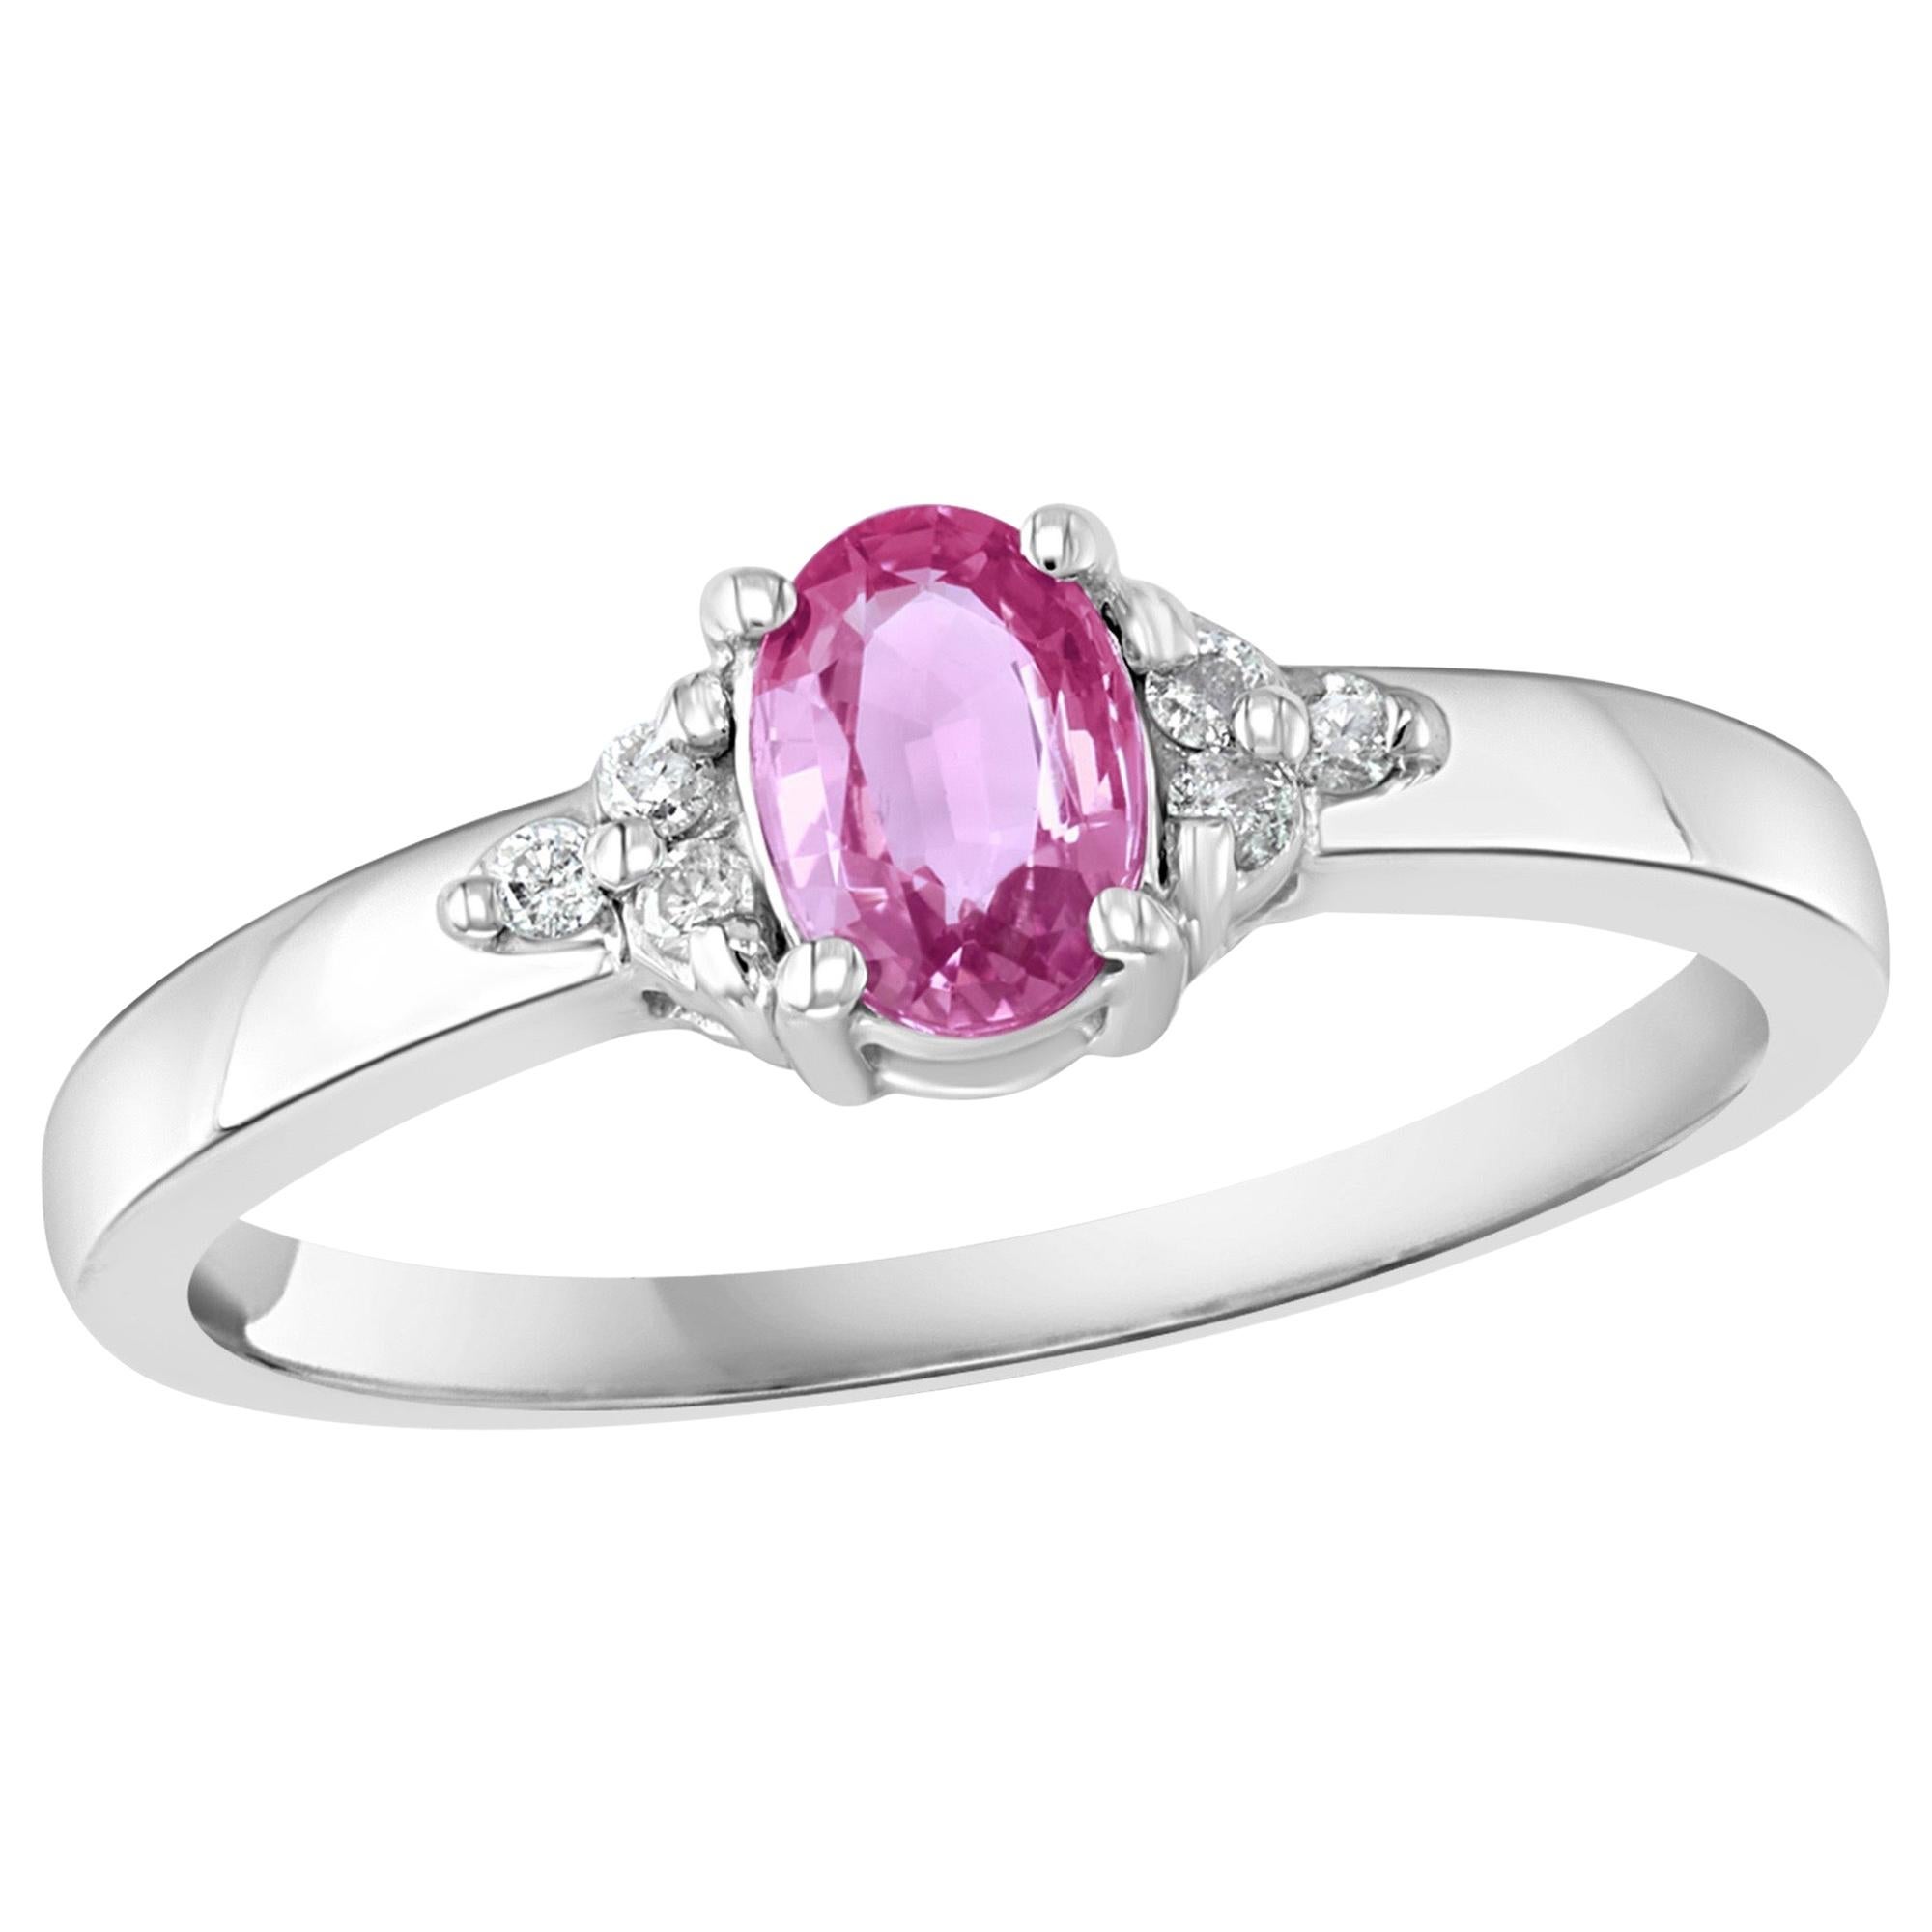 Pink Sapphire and Diamond 14 Karat White Gold Ring, Estate Size 6.5 